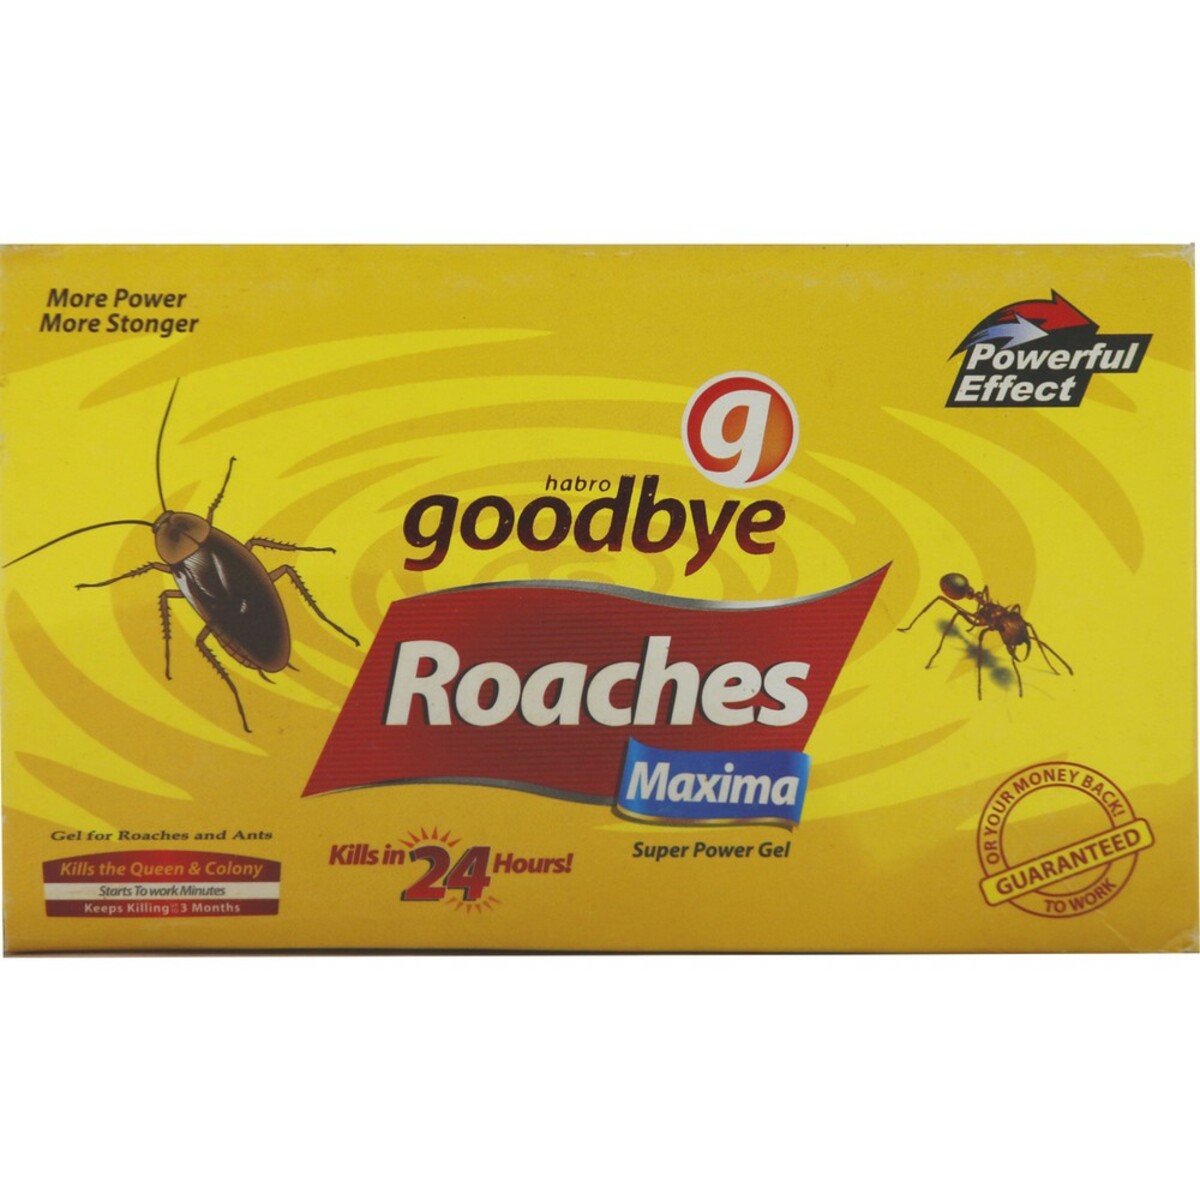 Habro Goodbye Roaches Maxima 25g R/Kill Gl